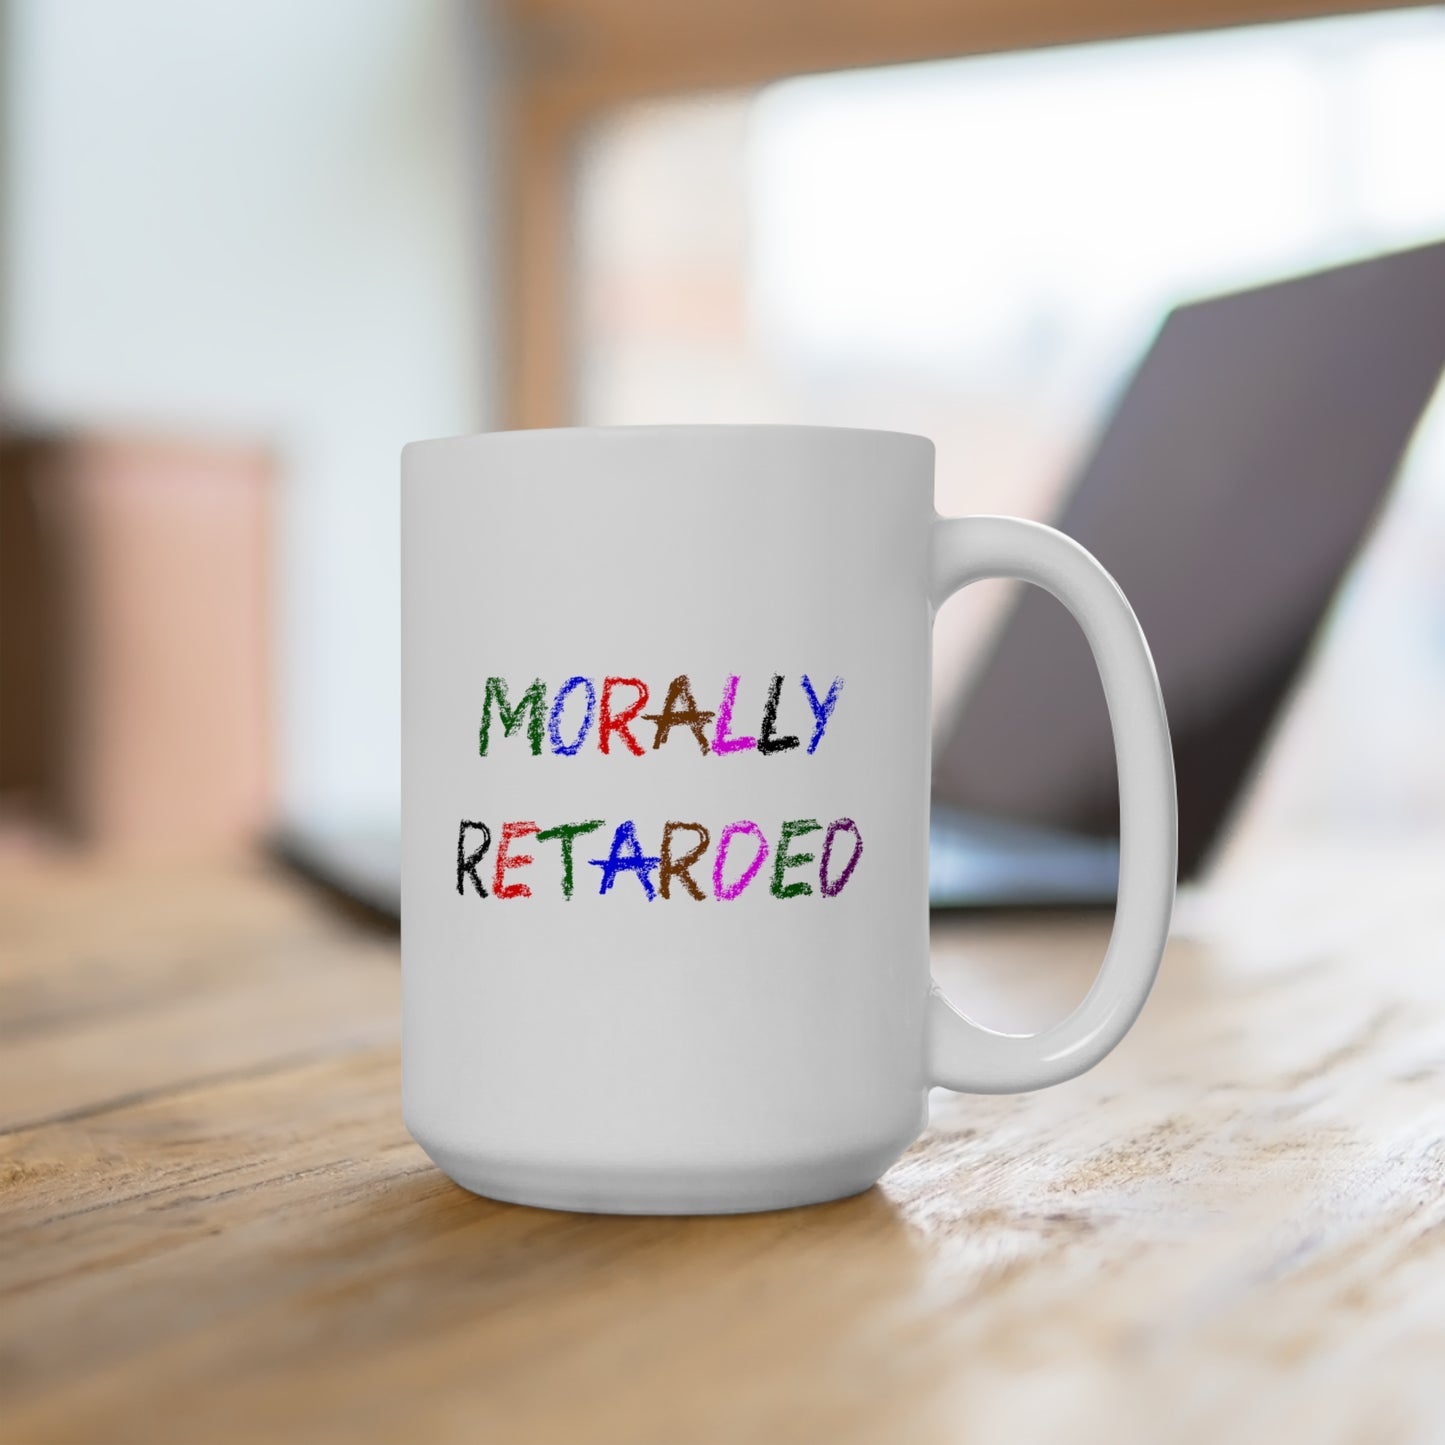 Morally Retarded - Coffee Mug